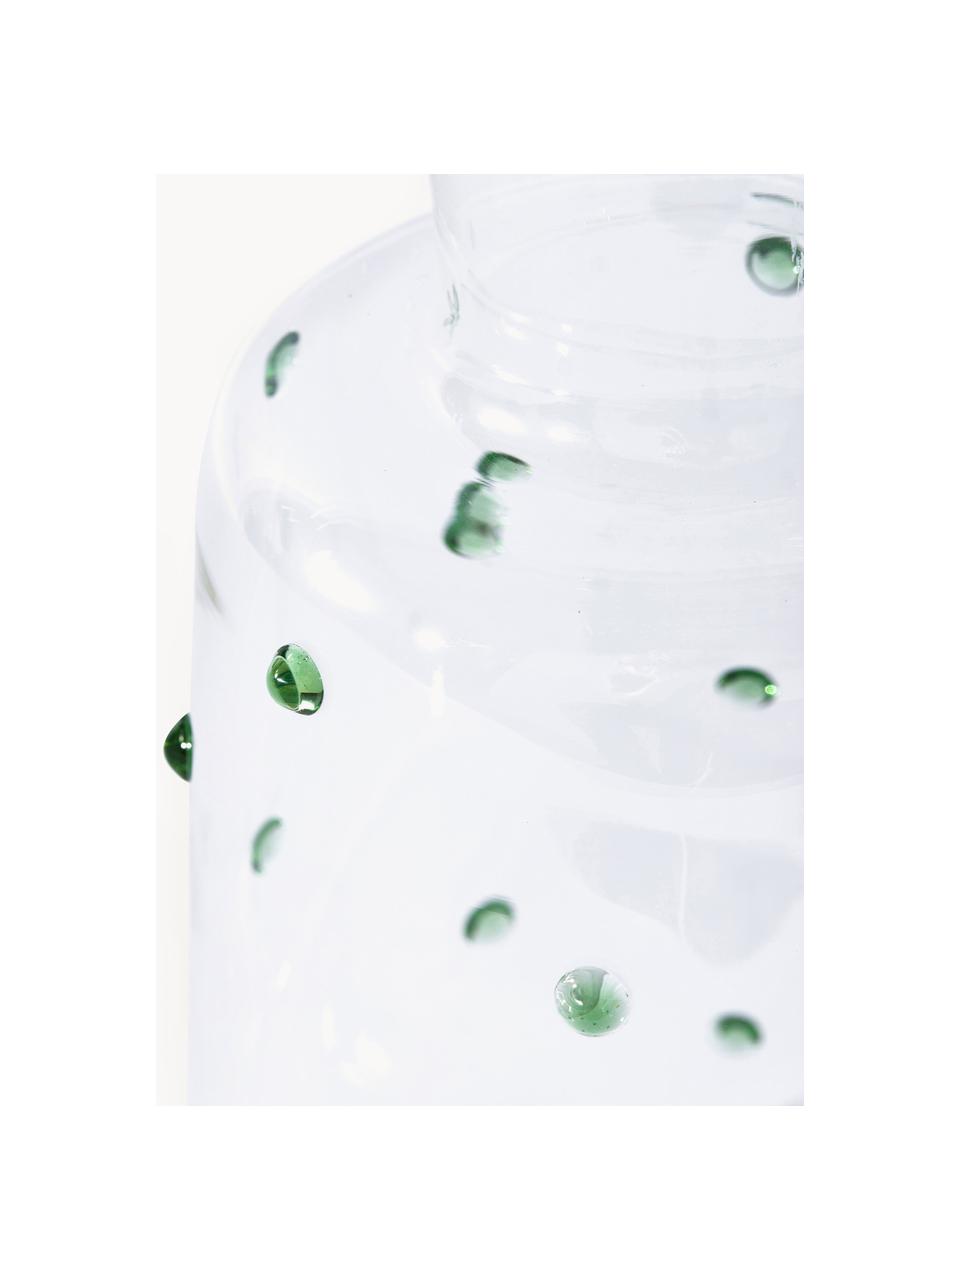 Mundgeblasene Karaffe Nob aus Borosilikatglas, 2 L, Borosilikatglas, mundgeblasen, Transparent, Grün, 2 L